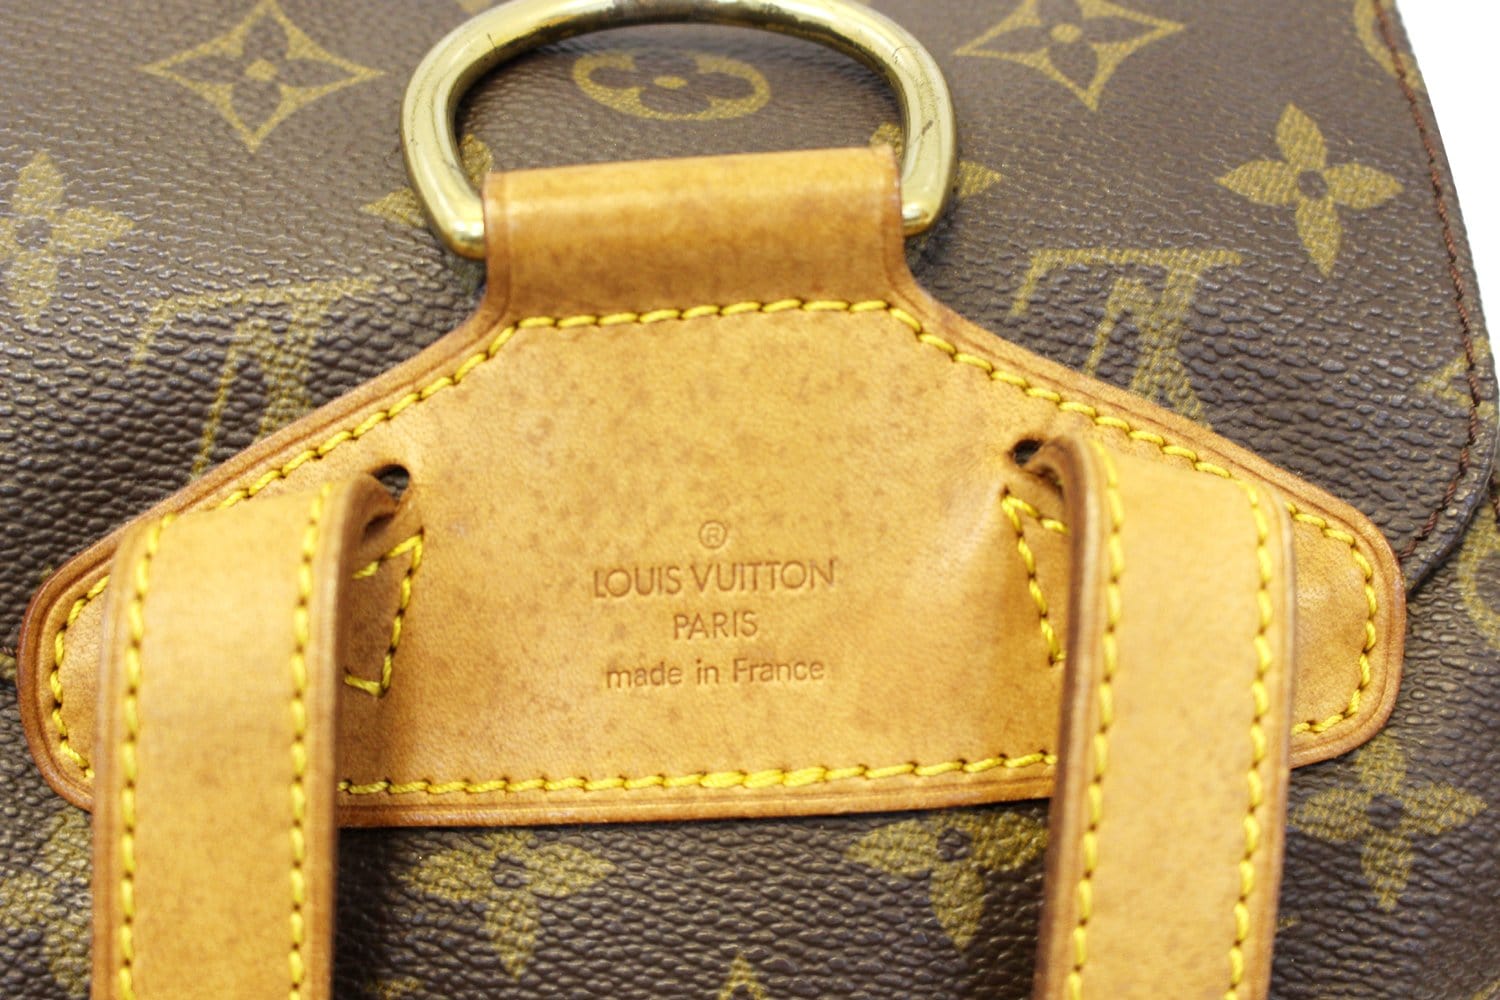 Louis Vuitton Malletiera Paris Maison Fondeefn 1854 Tan Brown Dustbag Cover  12